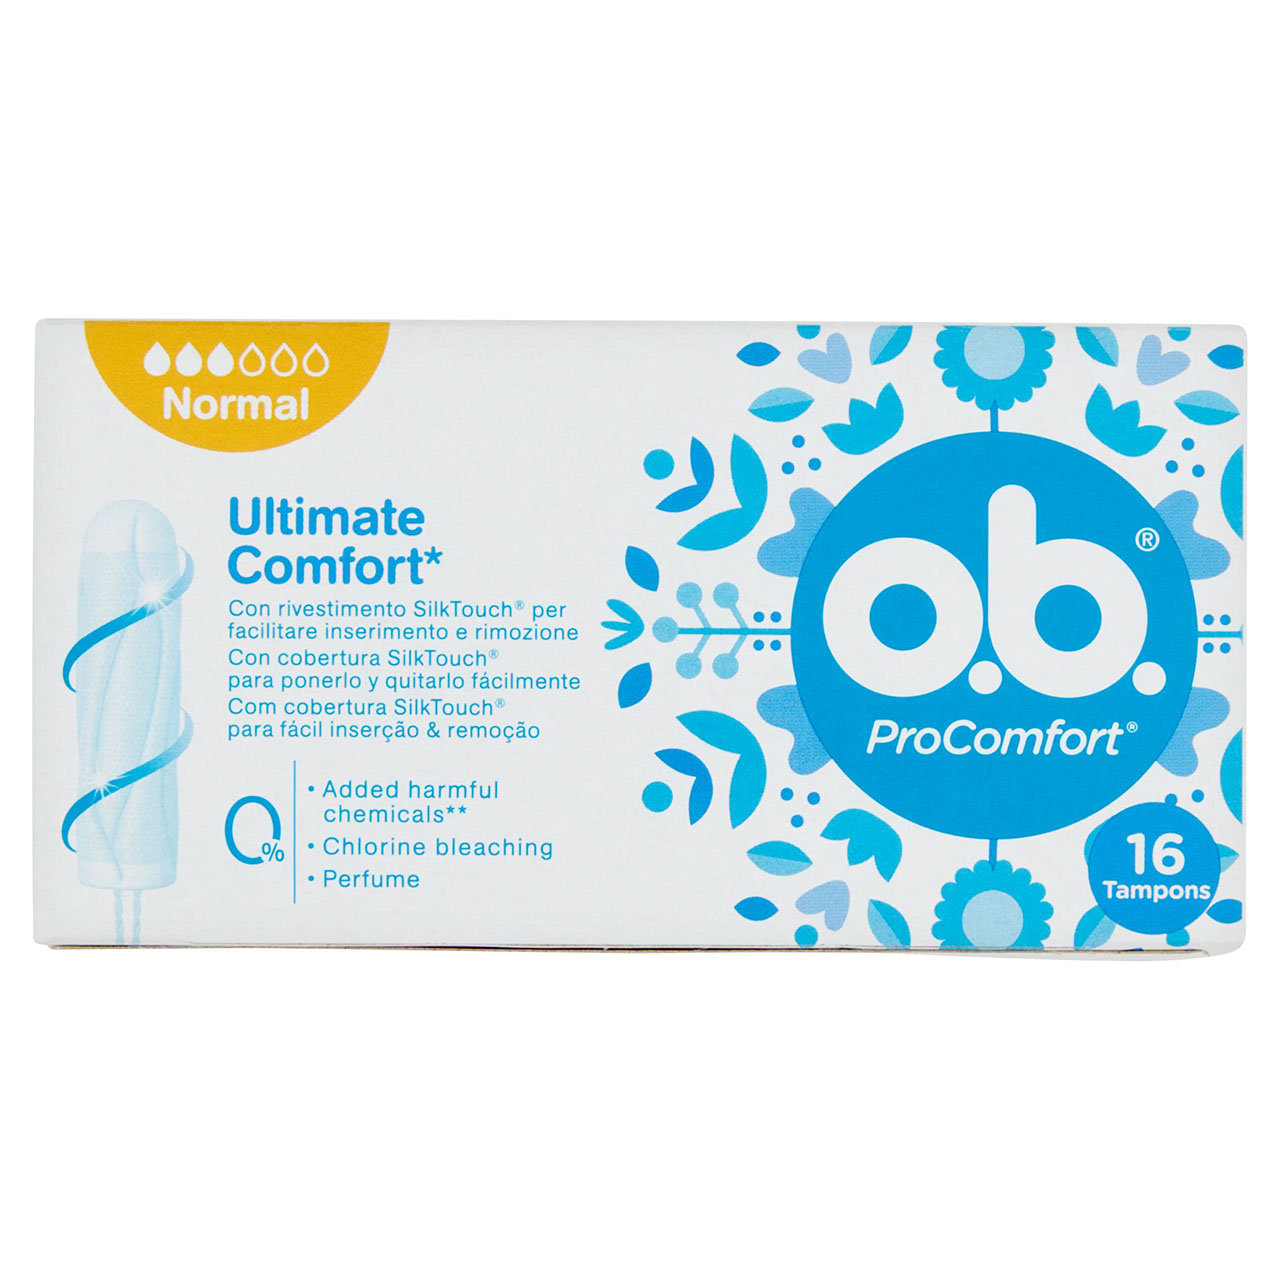 o.b. ProComfort Ultimate Comfort Normal 16 pz